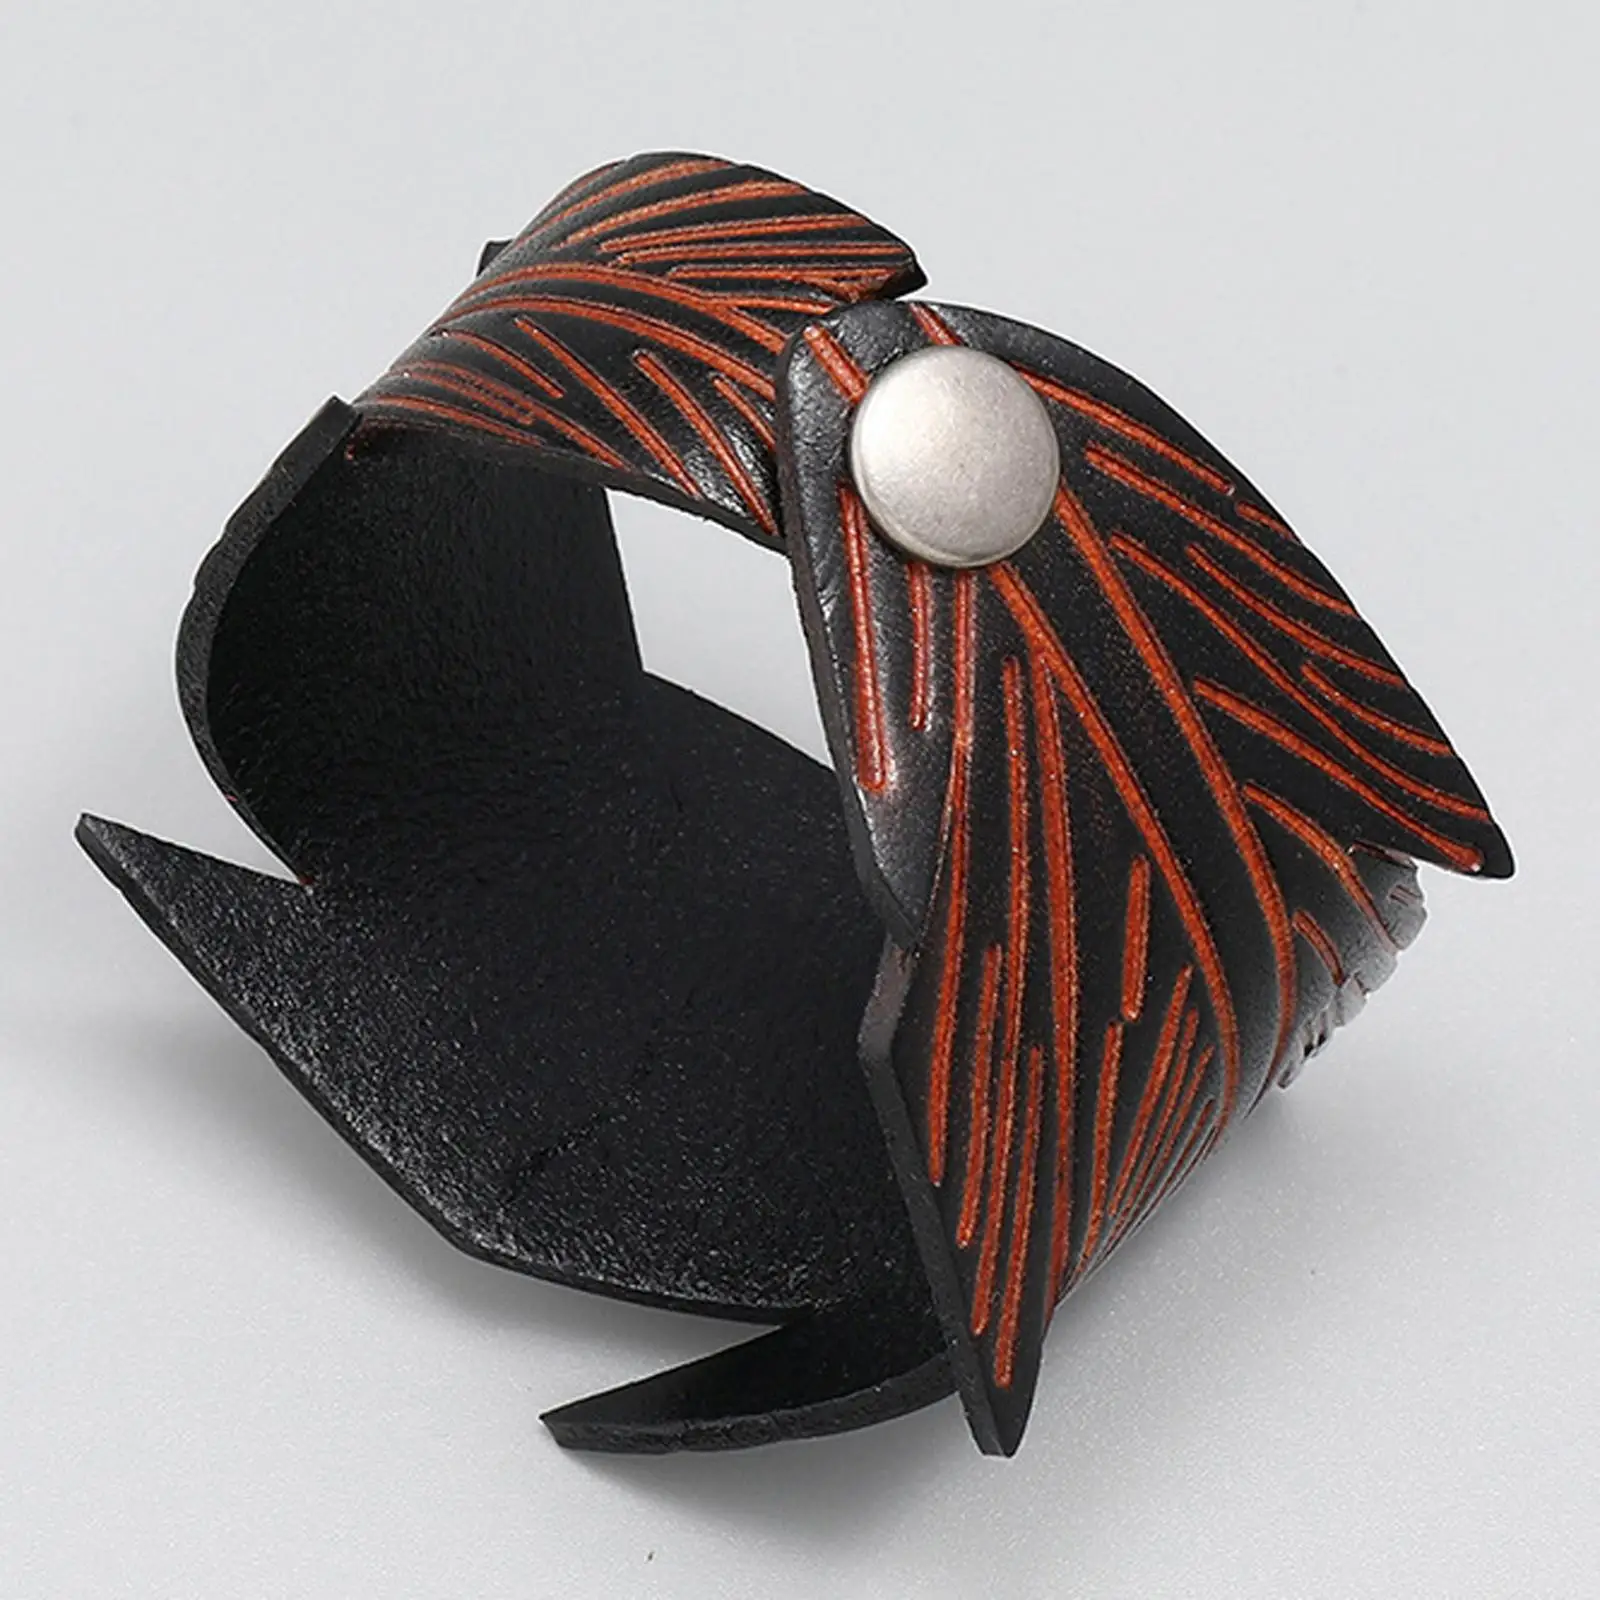 Mens Leather Bracelet Wide Cuff Bracelets Bangle Black Wrist Cuff Jewelry